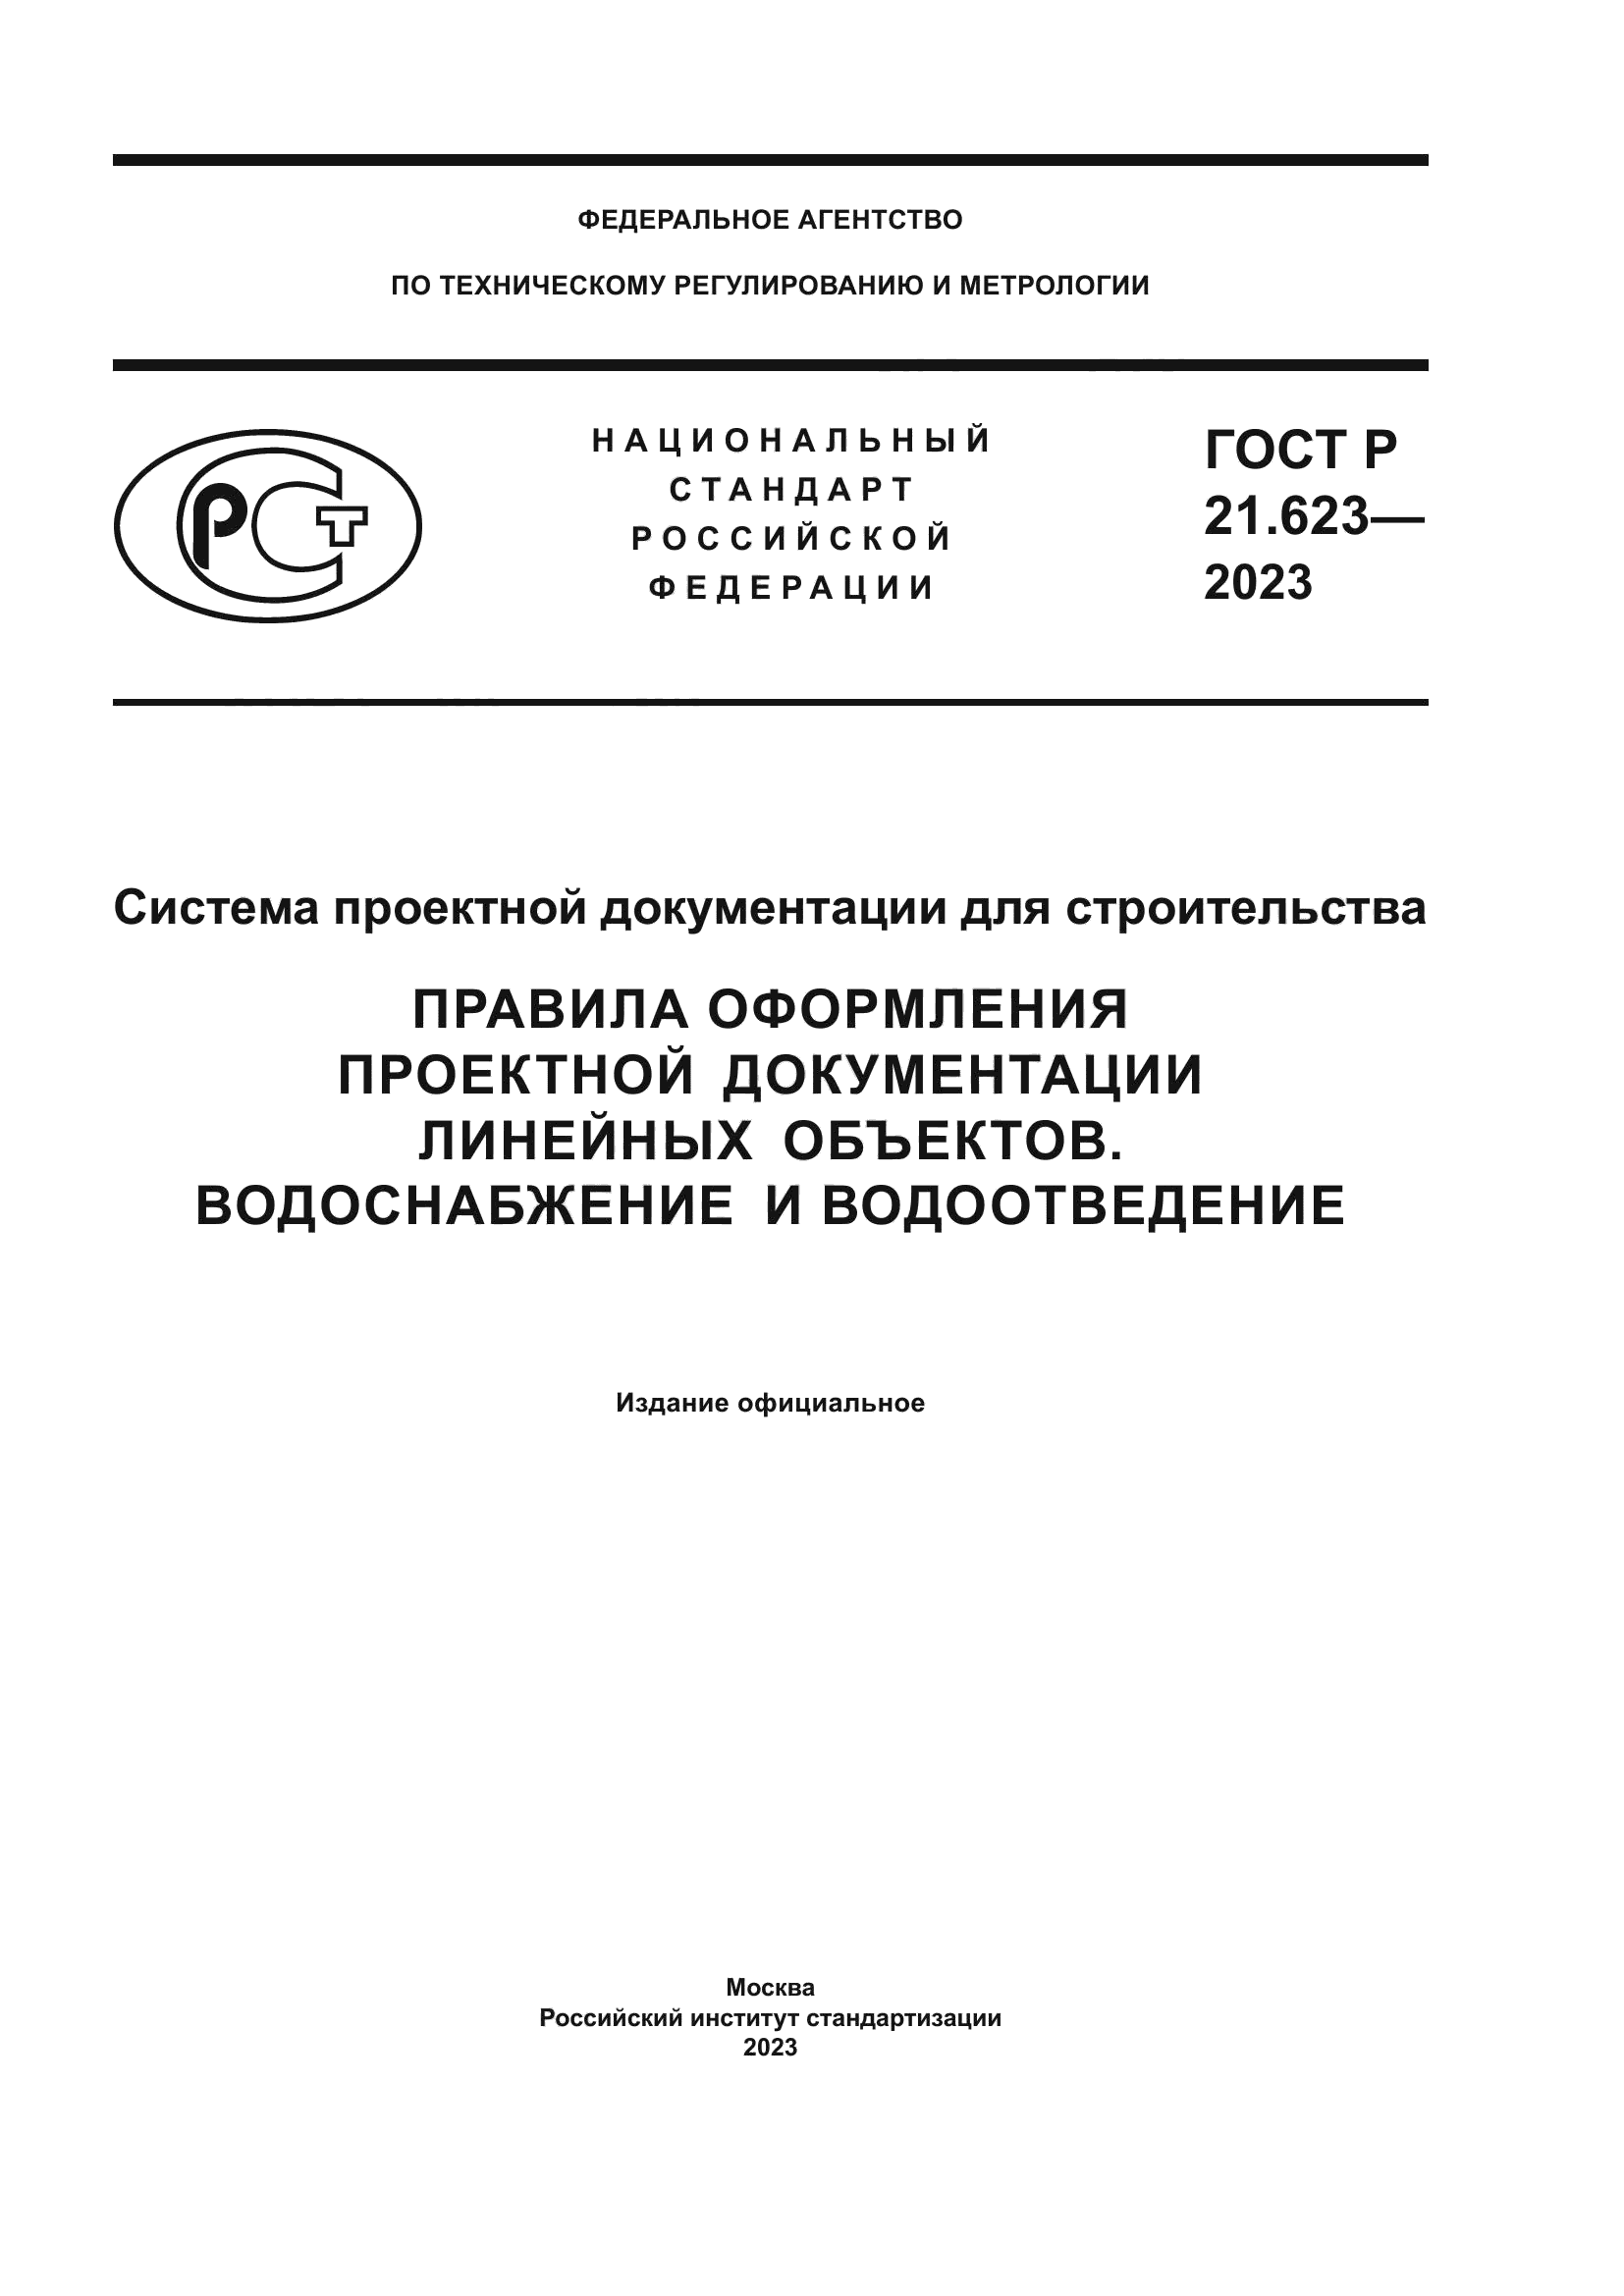 ГОСТ Р 21.623-2023